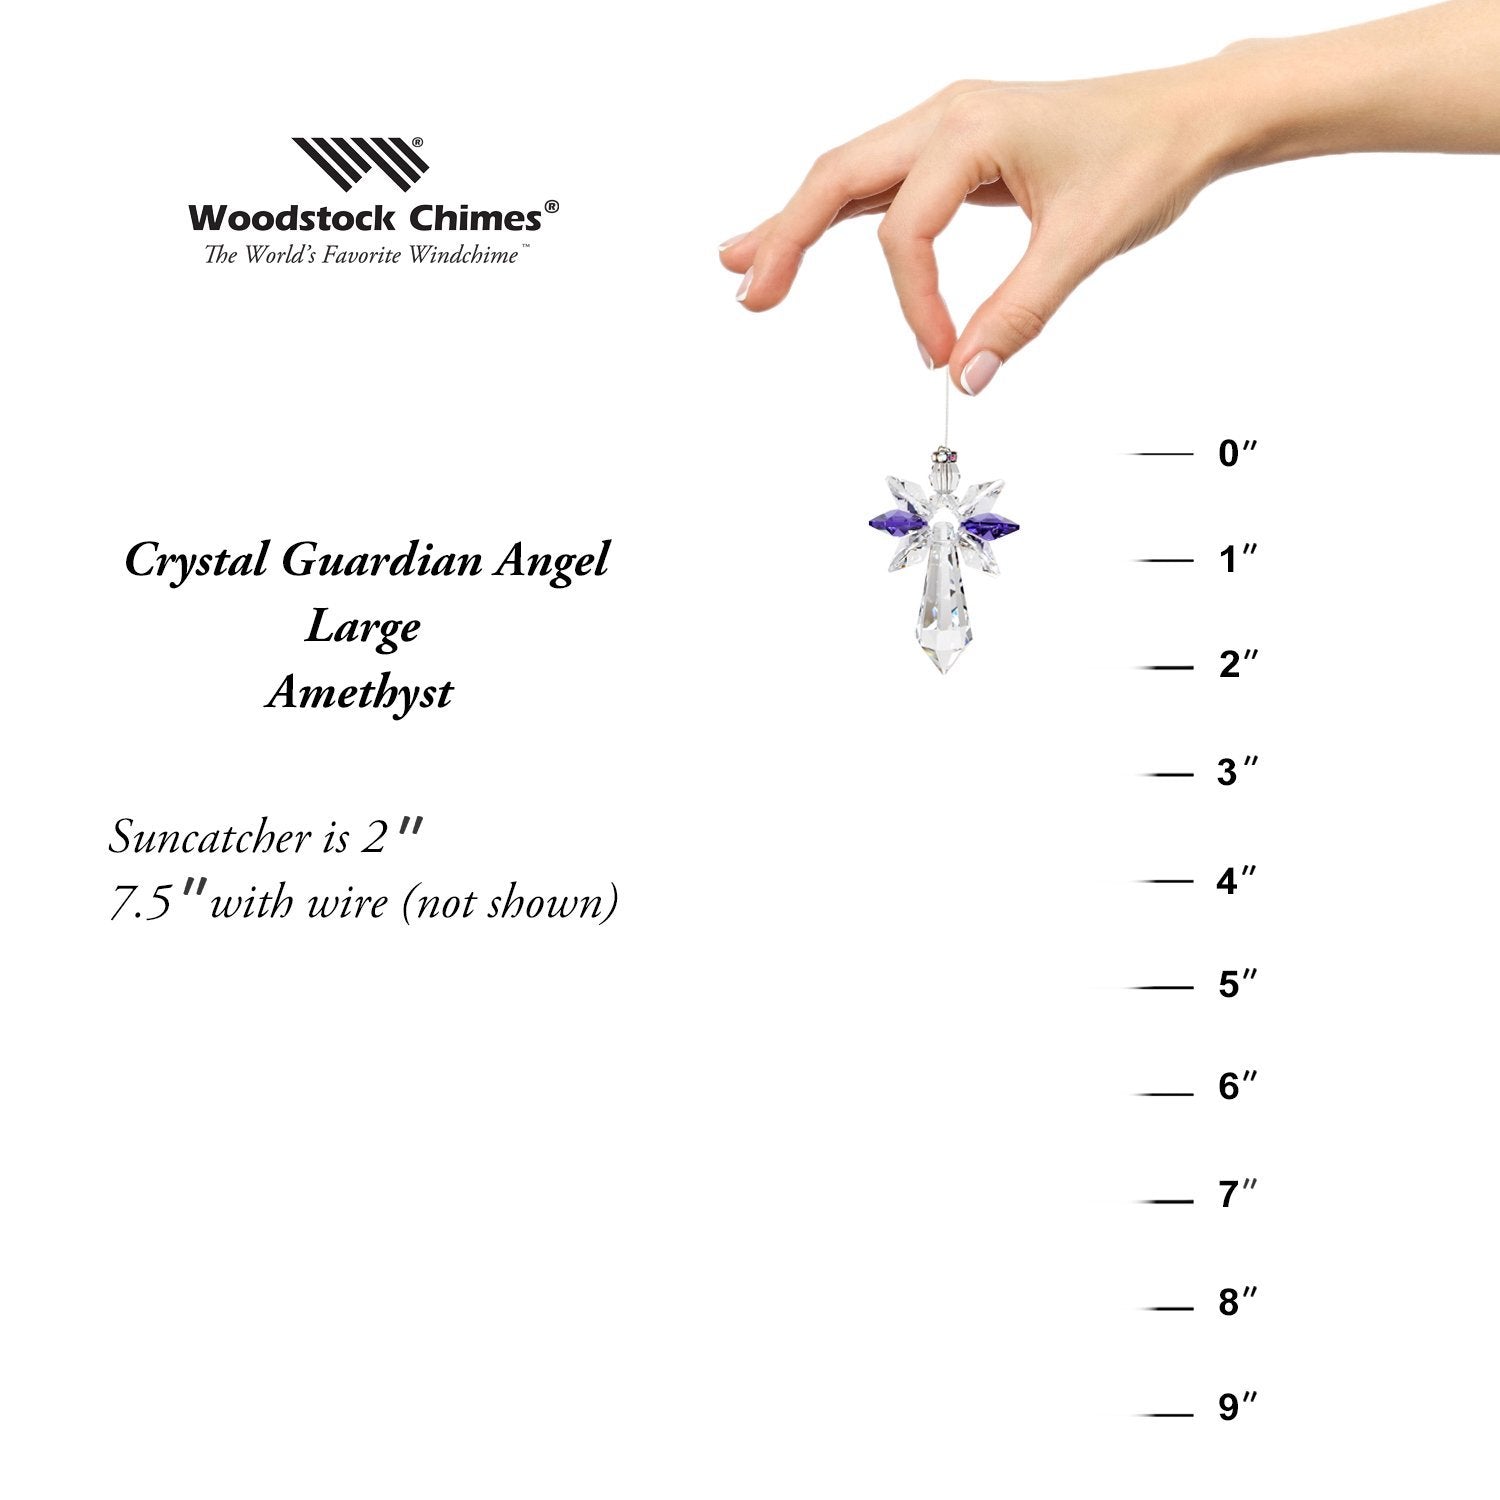 Crystal Guardian Angel Suncatcher - Large, Amethyst proportion image